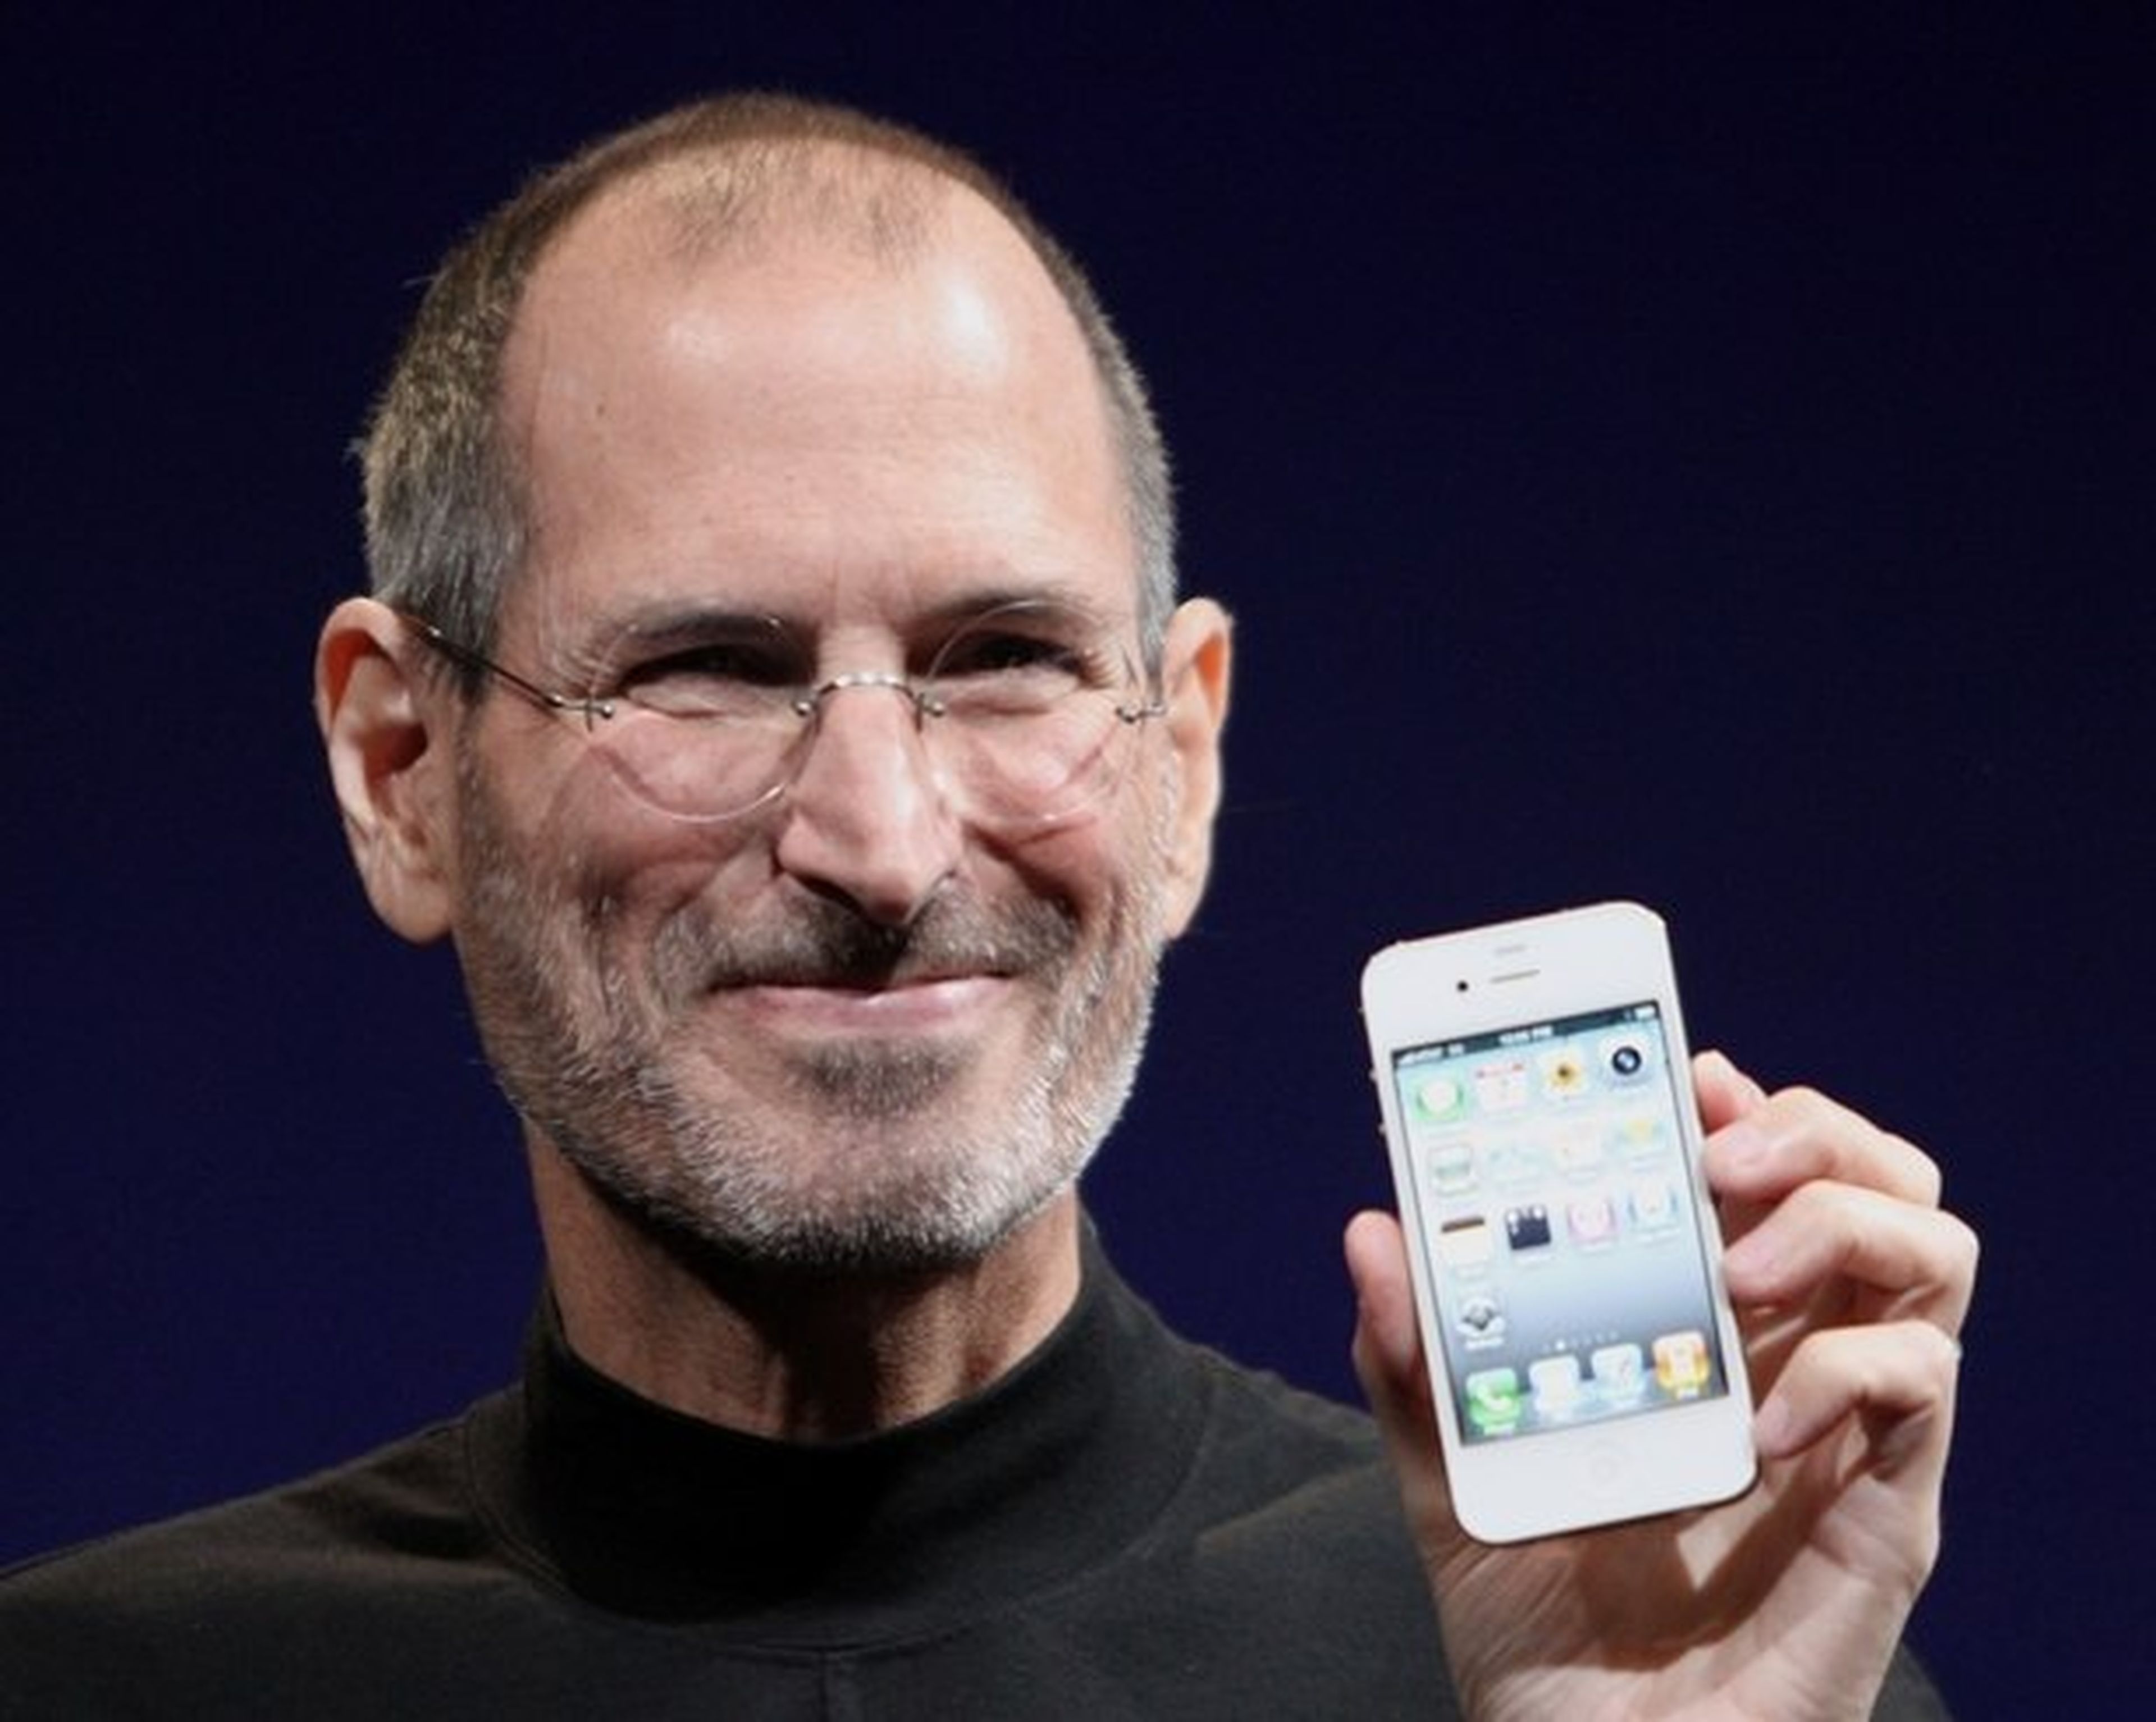 Las excentricidades de Steve Jobs